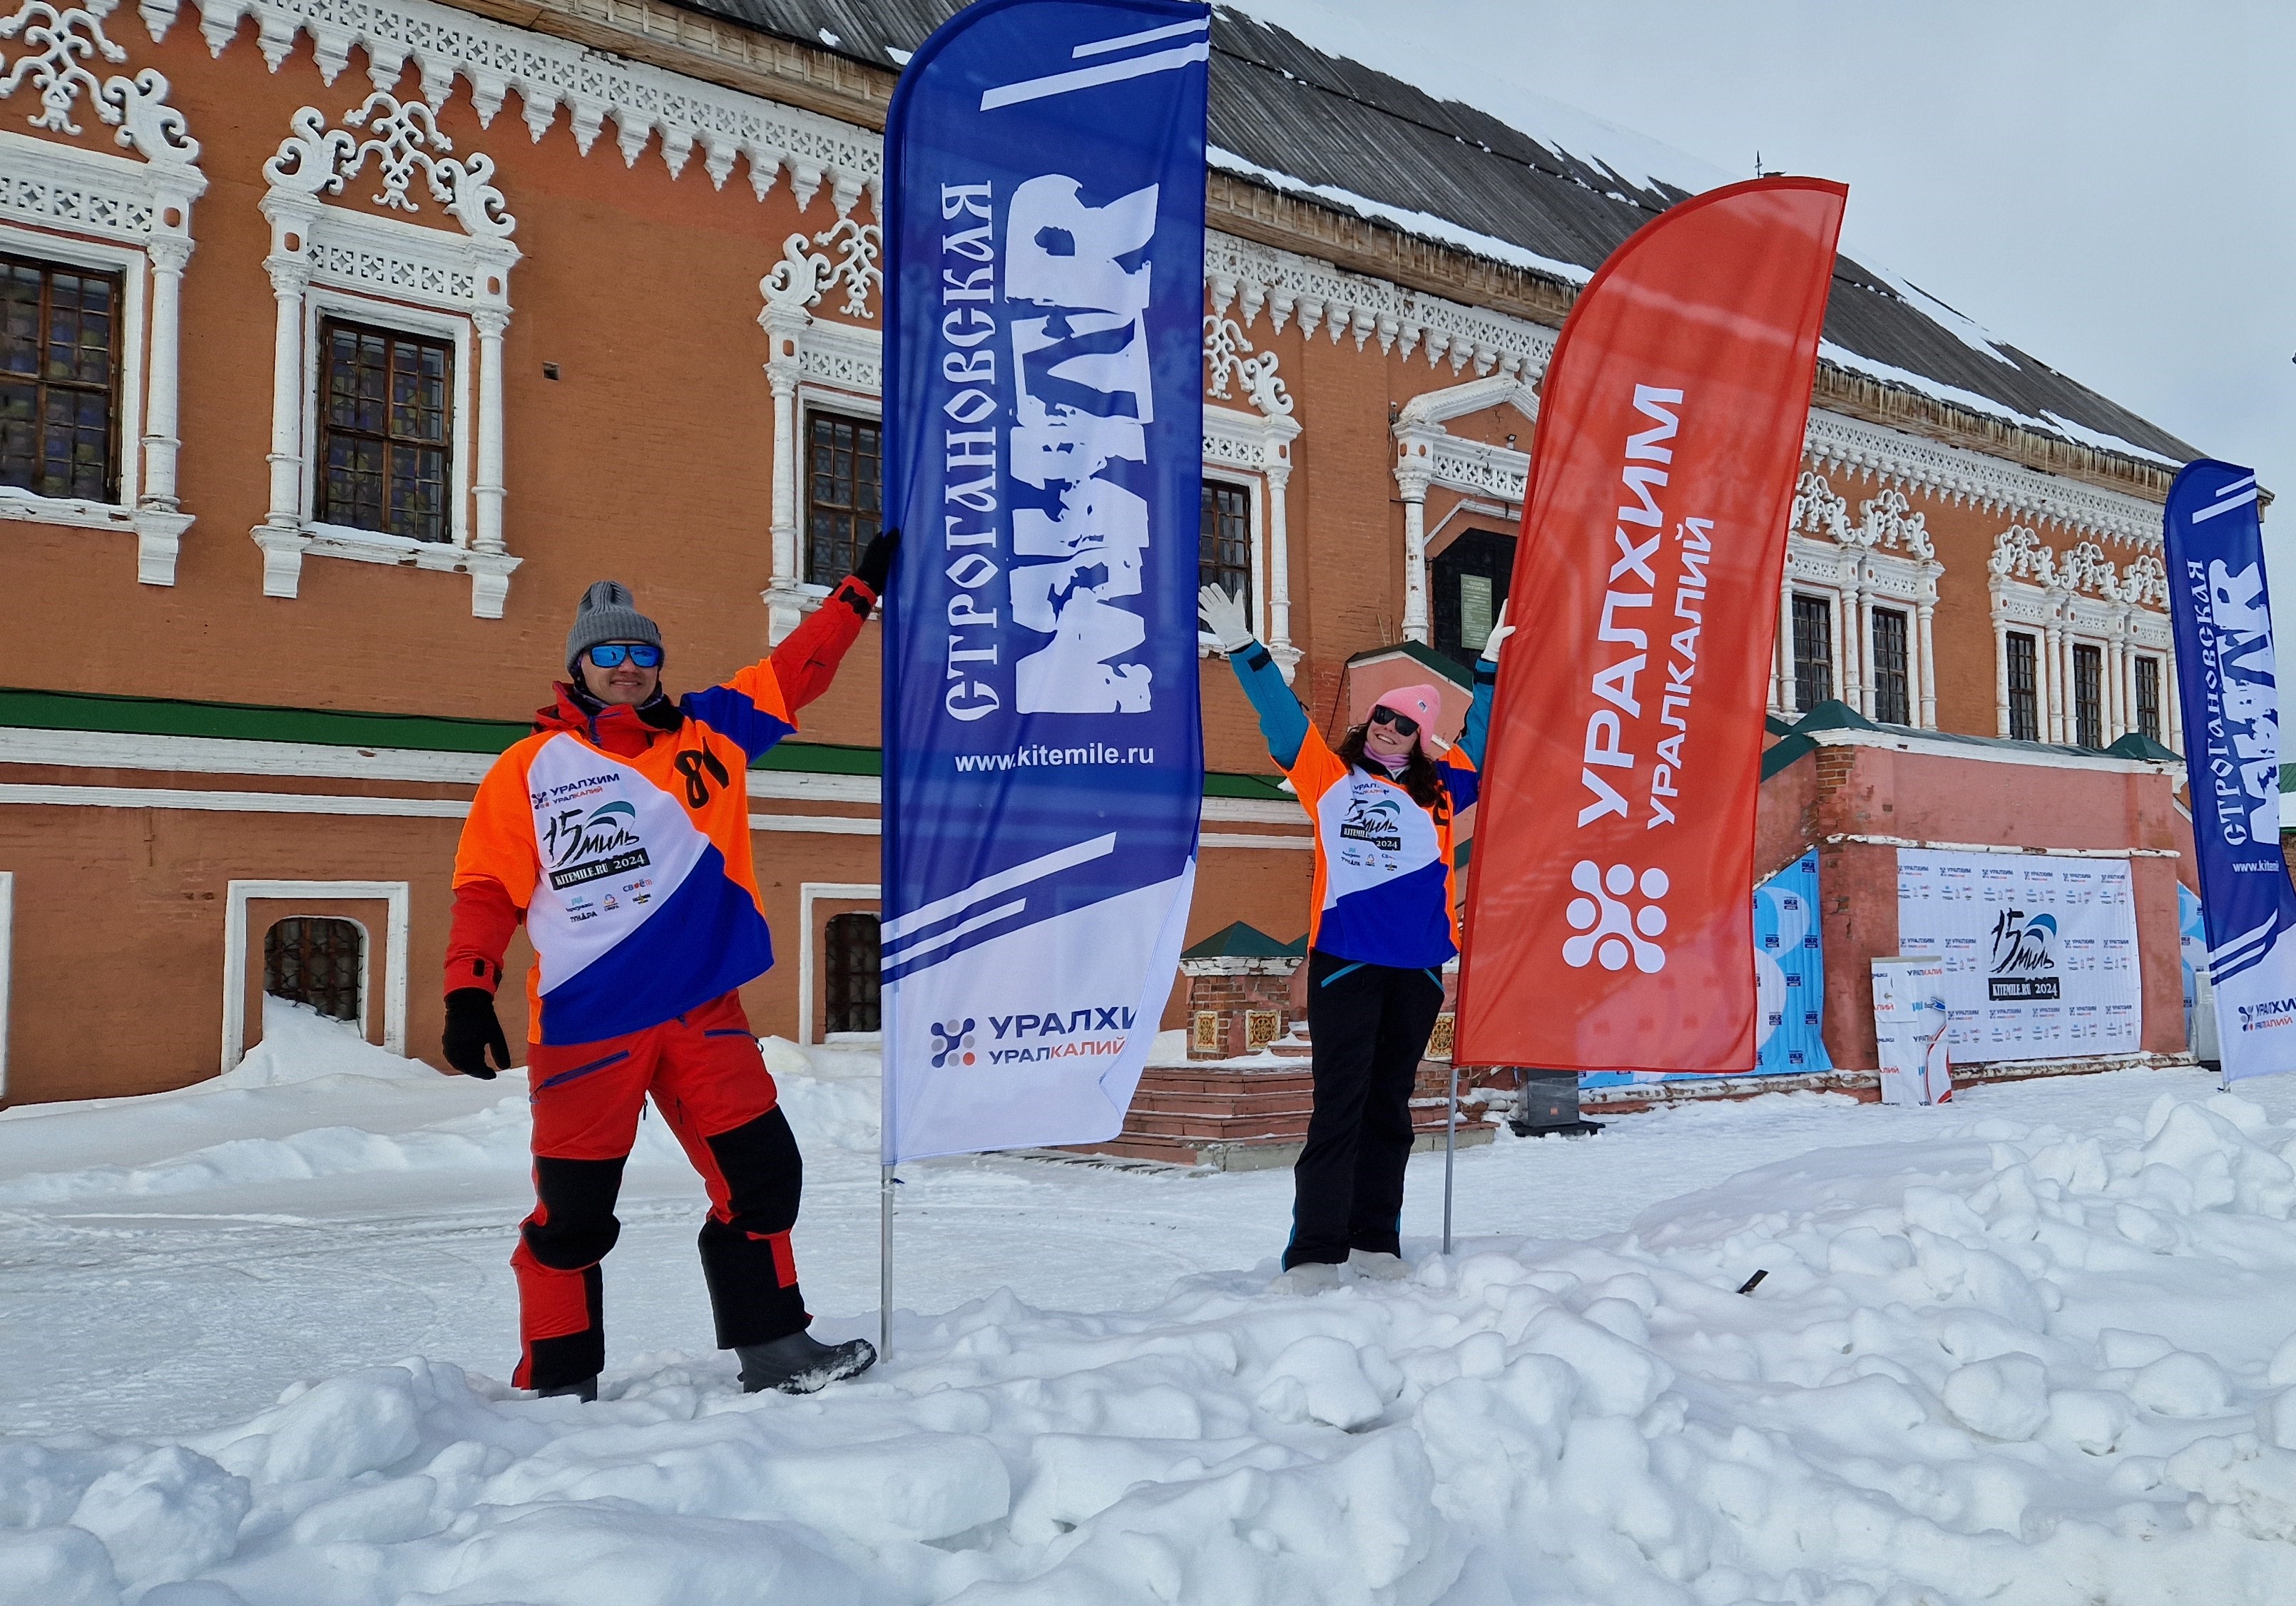 Uralkali is the Main Sponsor of the Stroganov Mile 2024 Snowkiting Competition